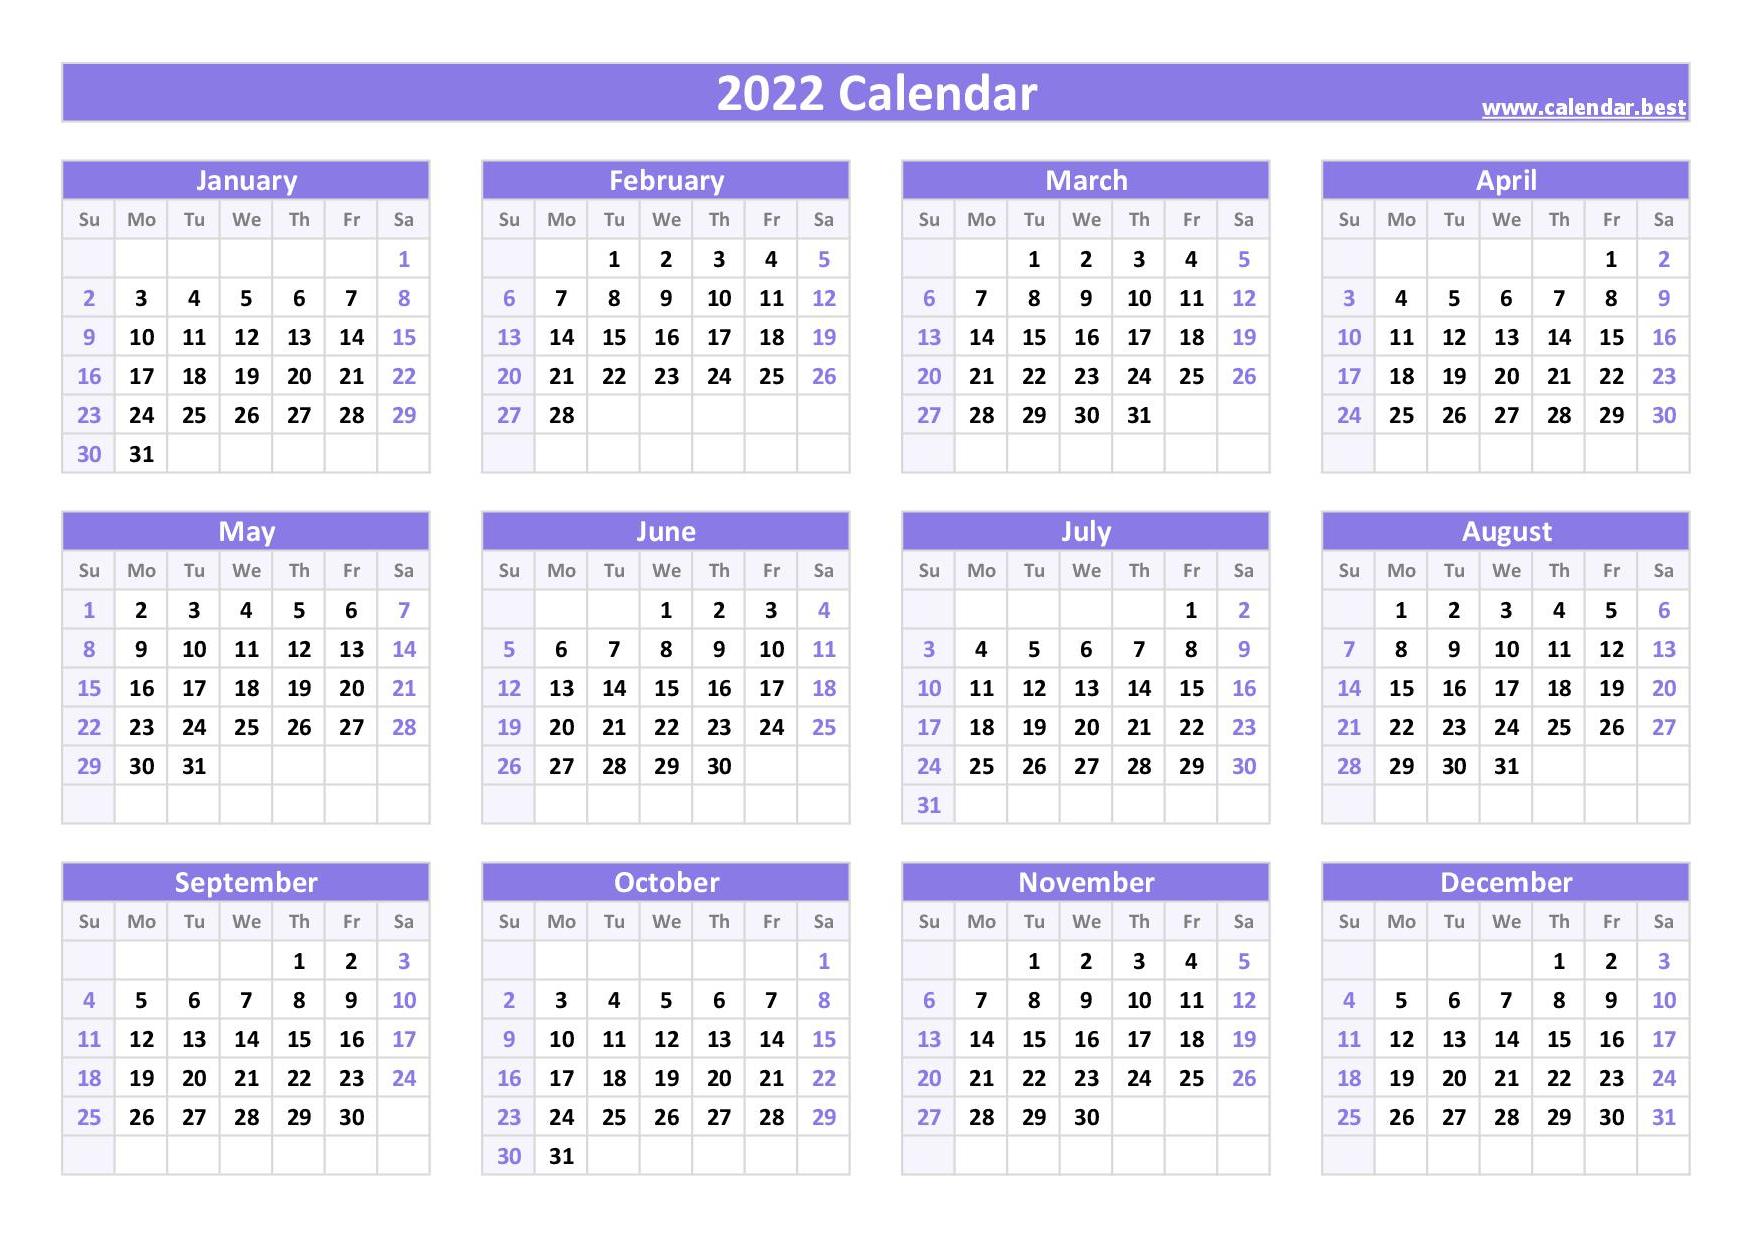 27 неделя число. Календарь 2022 2022. Календарь 2022 календарь. Календарь 2022-23. Календарь недель 2022.